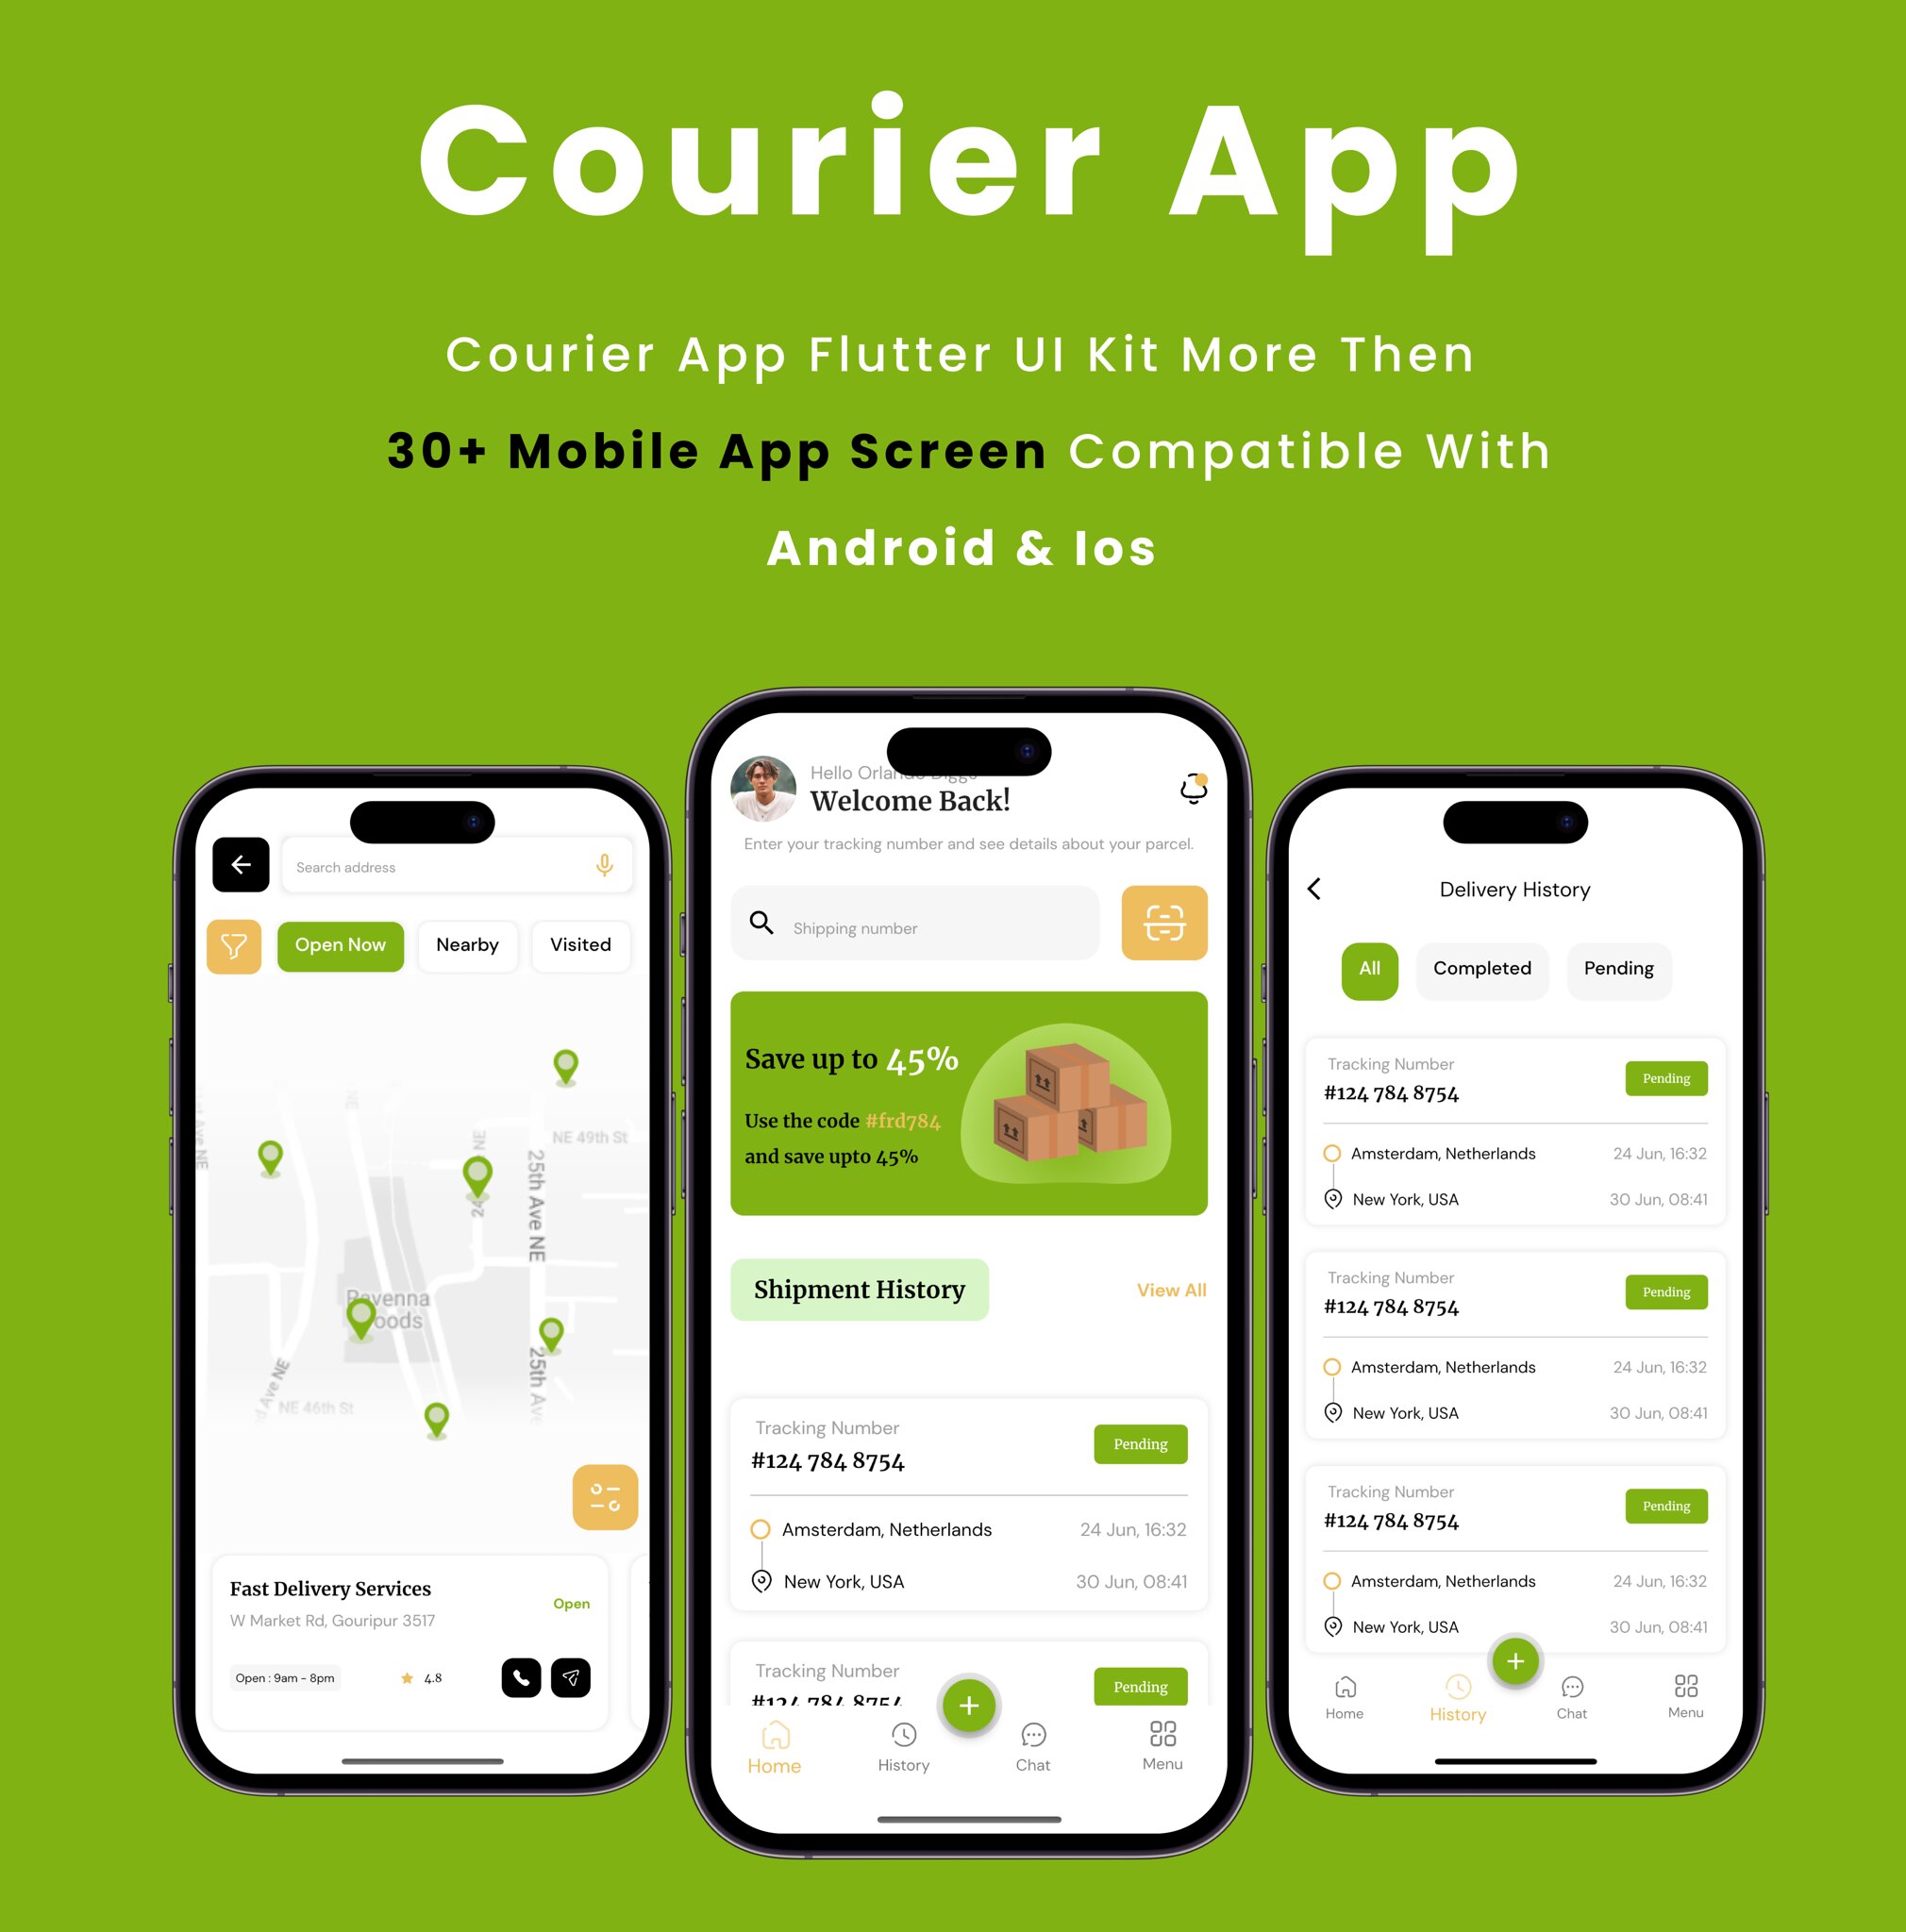 Courier App - Flutter Mobile App Template